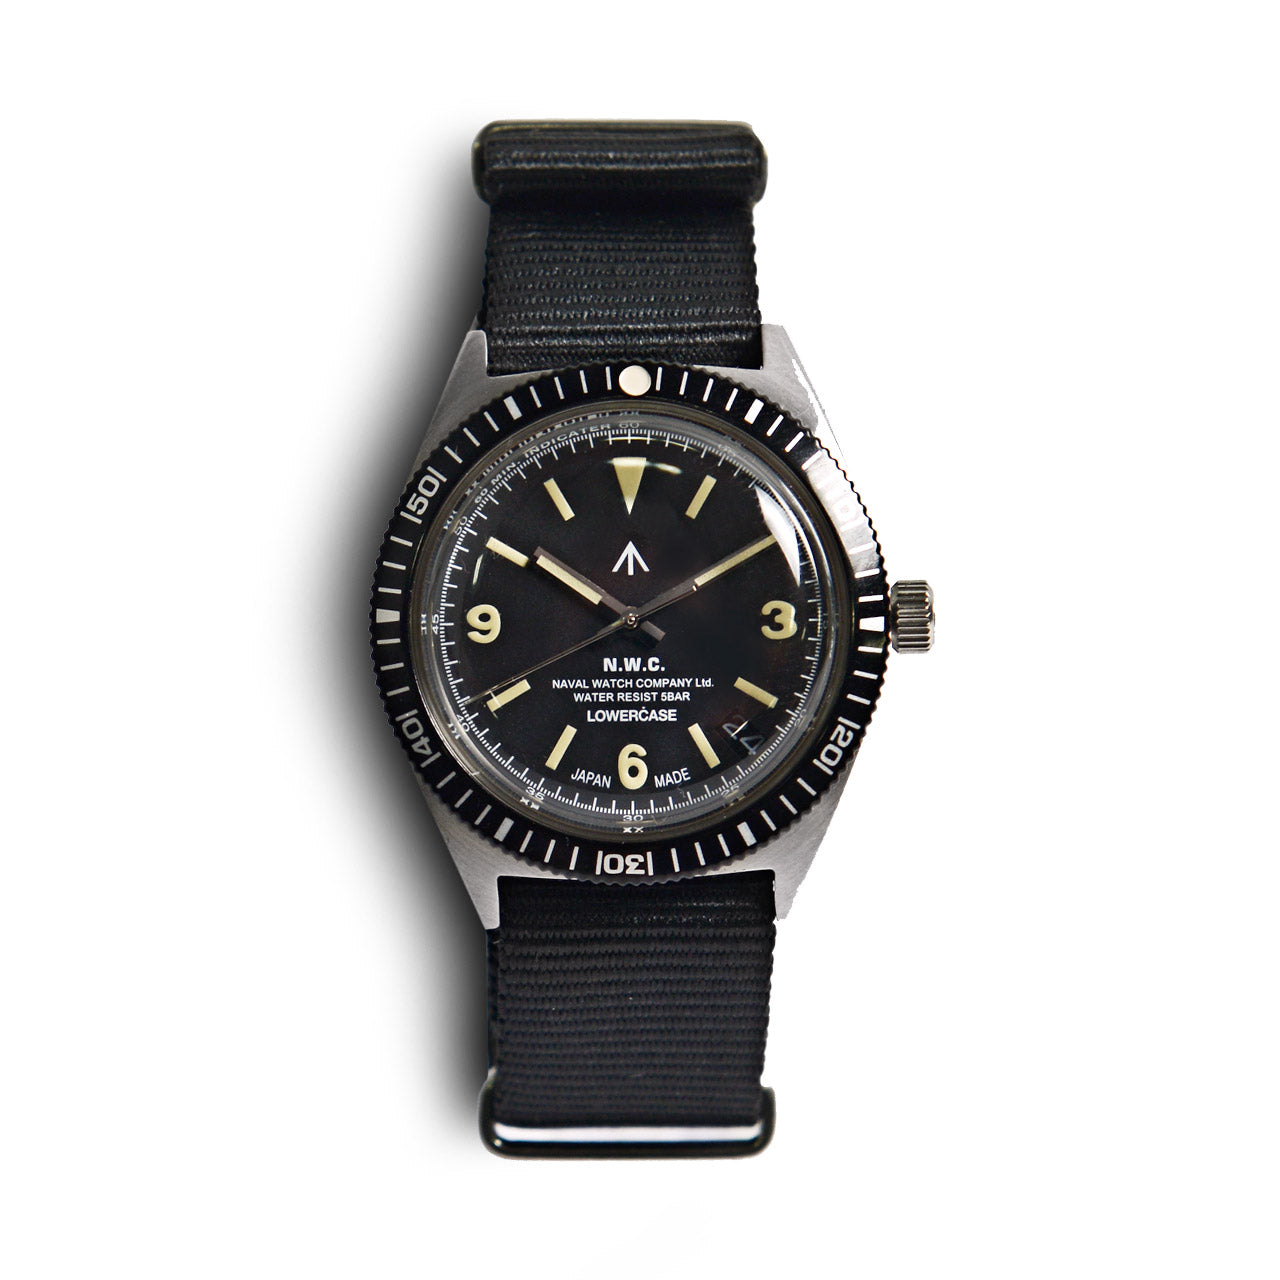 Naval Watch Co. FRXB002 Watch | Uncrate